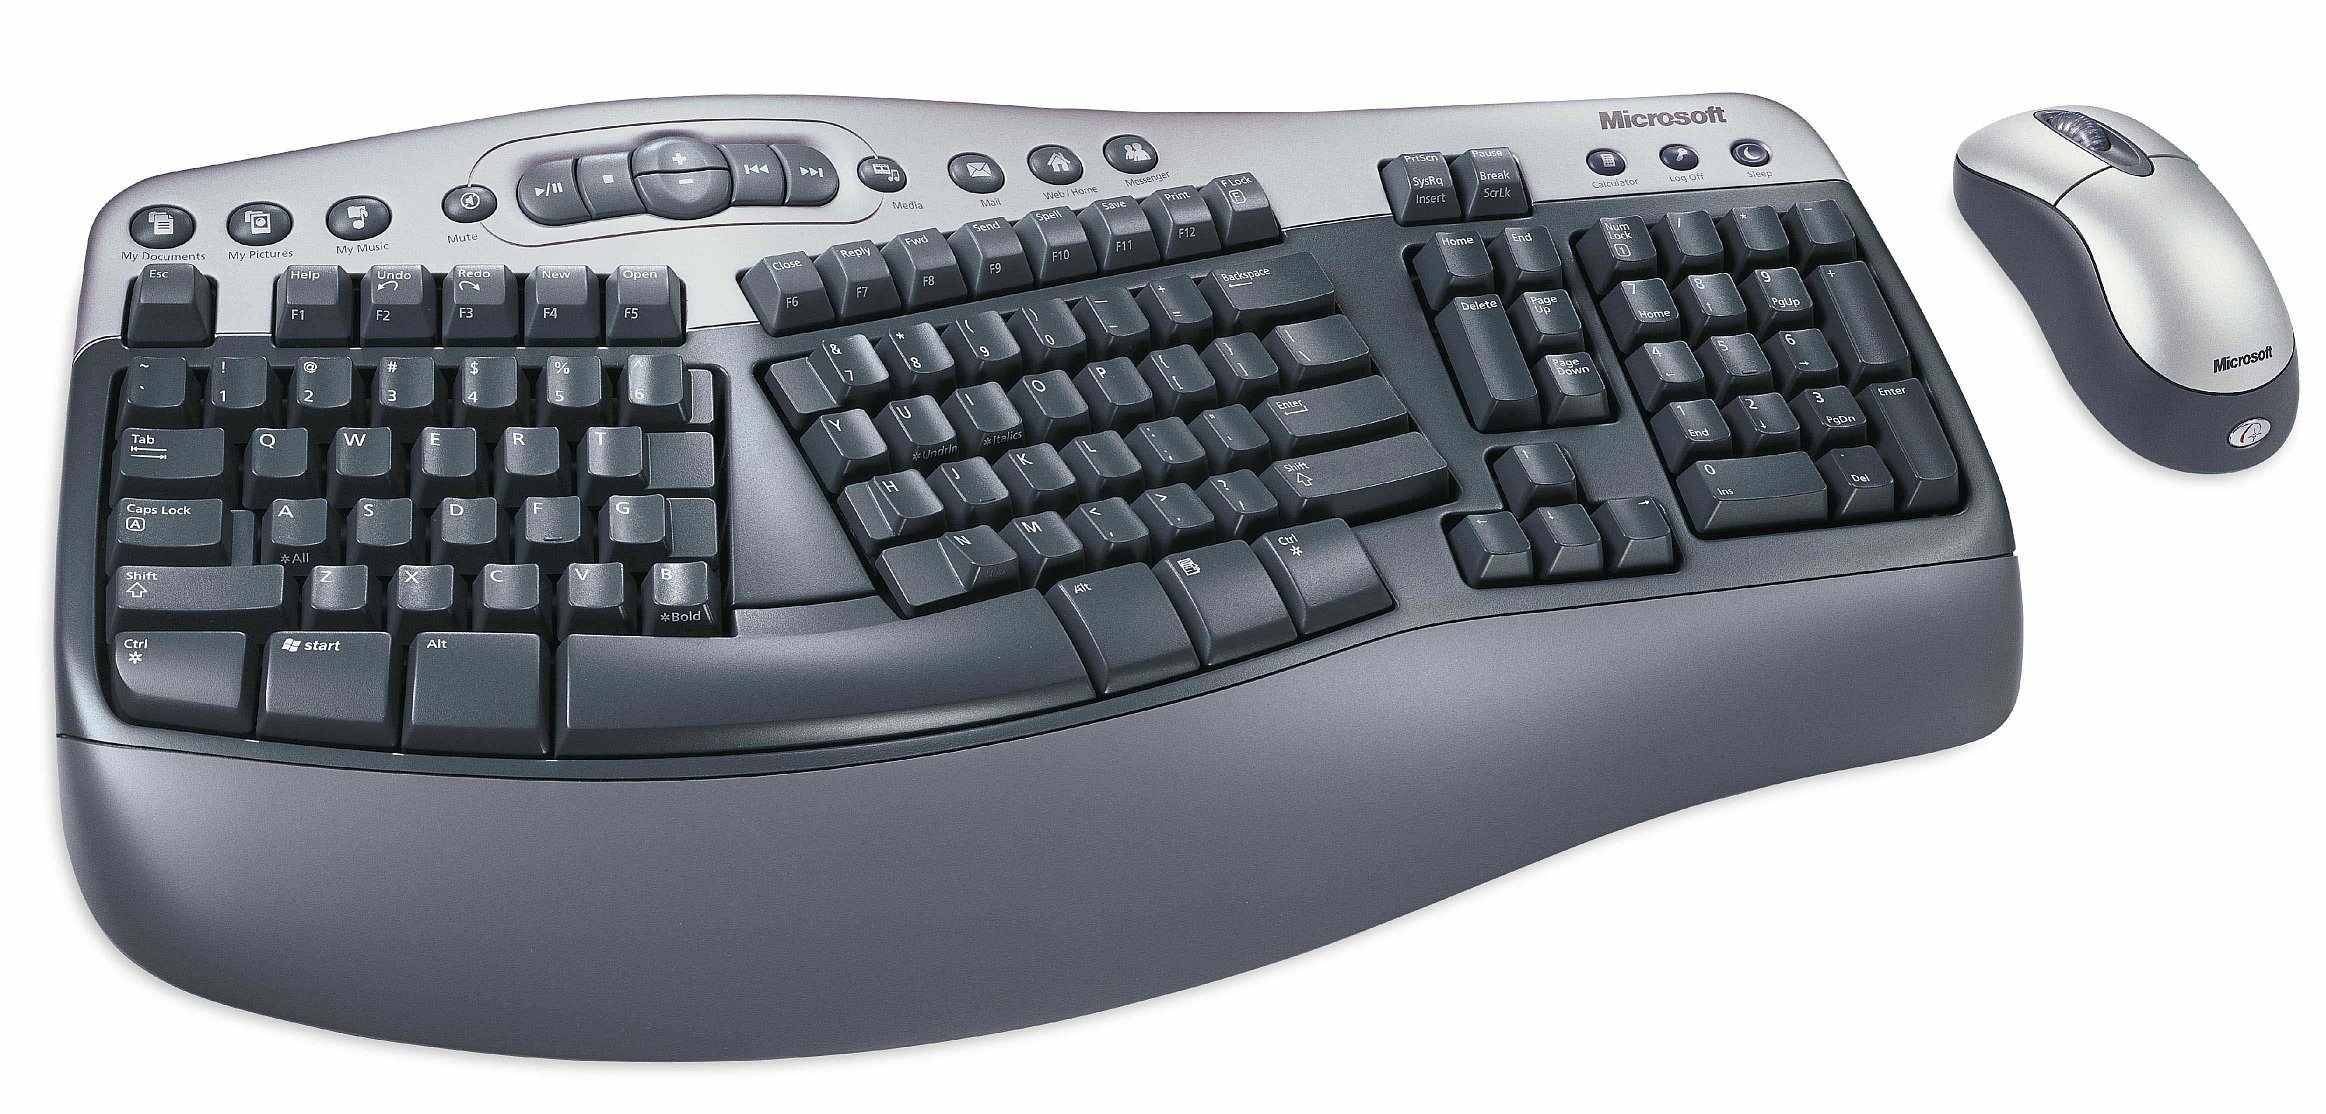 Microsoft Natural Multimedia keyboard 62725 s